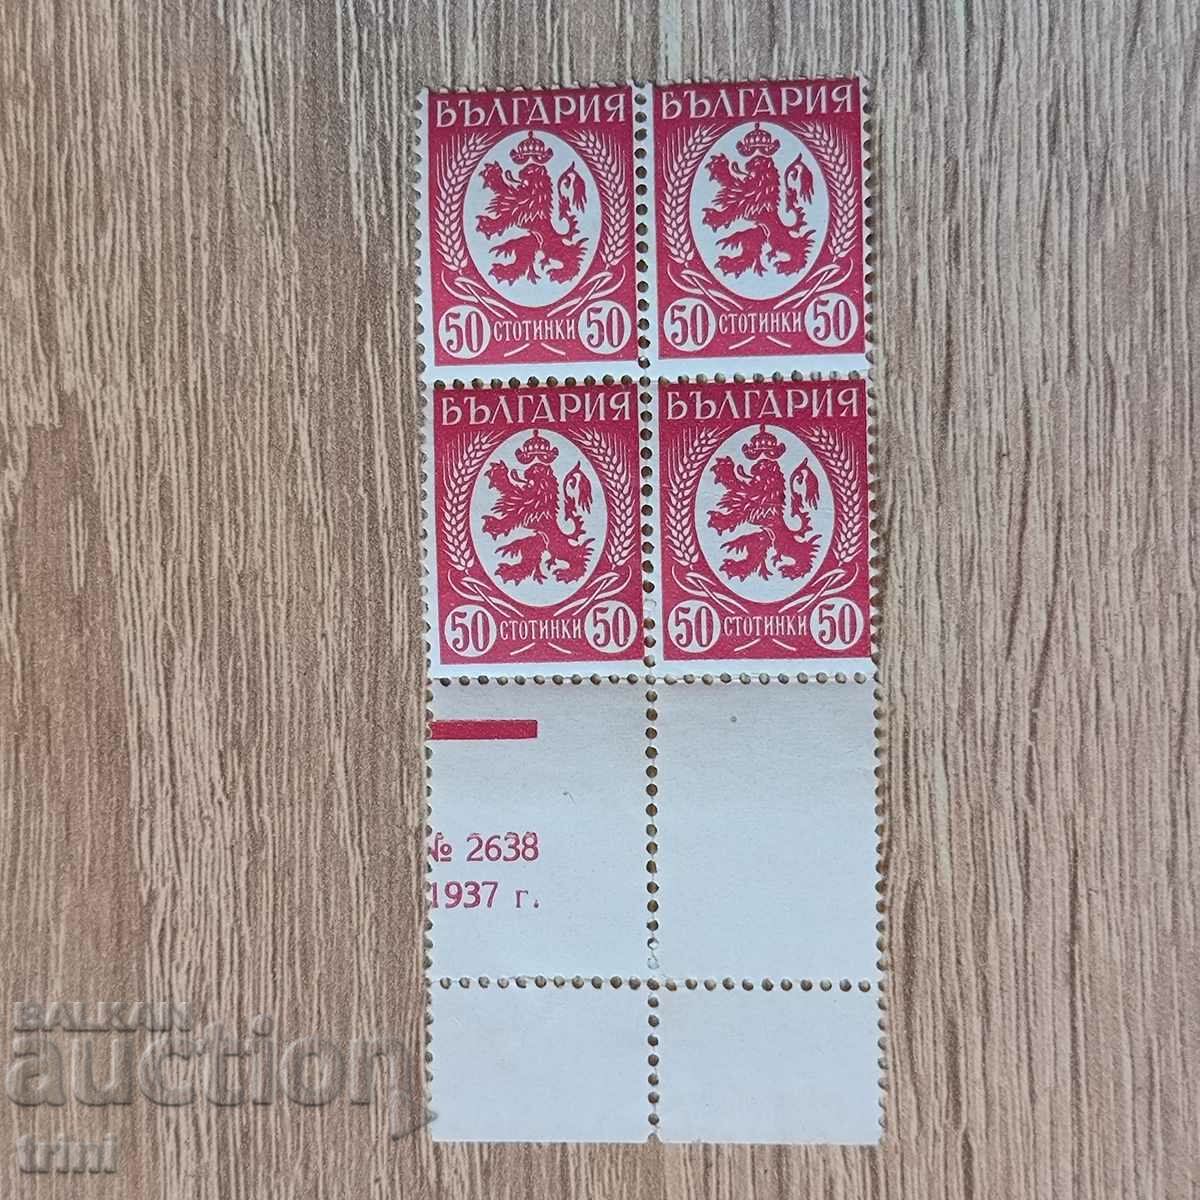 Bulgaria 1936 50 de centi patrati varianta rosu